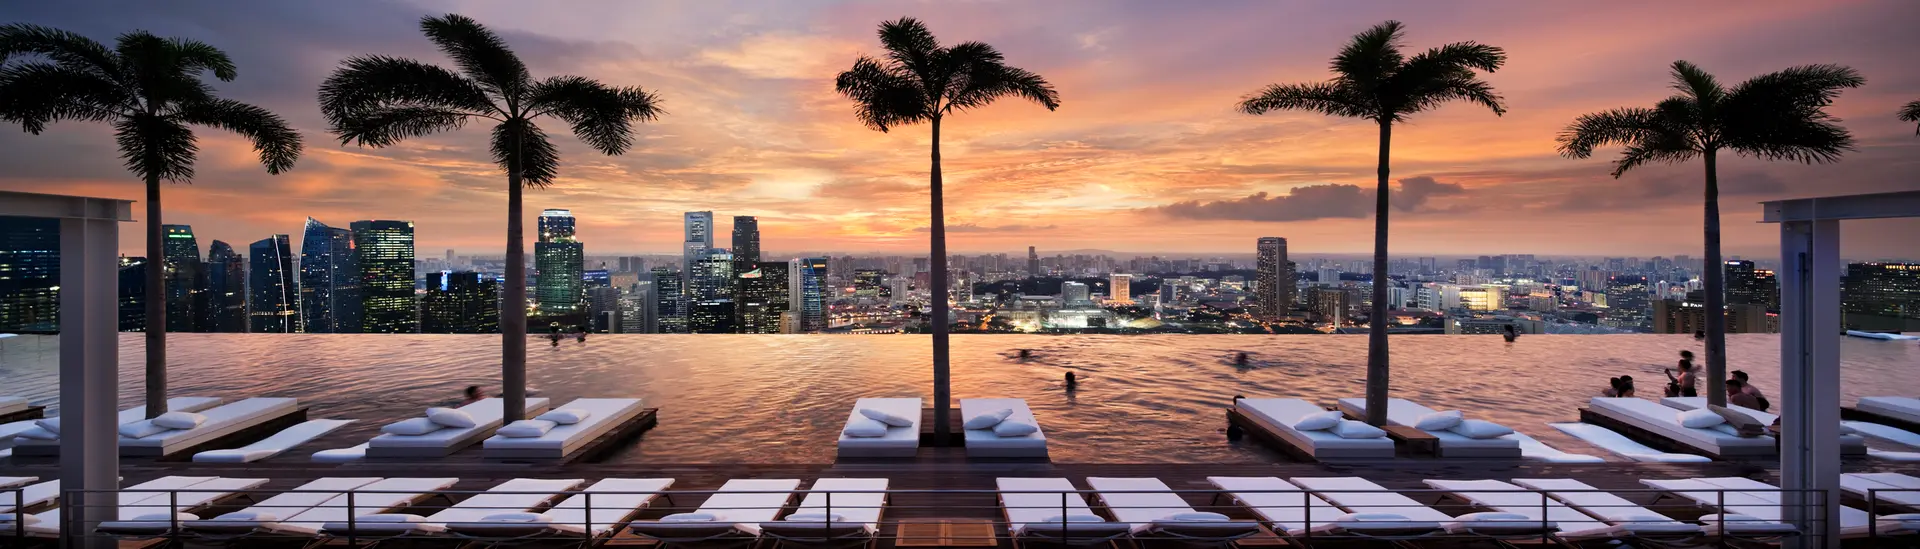 Hotel review Service & Facilities' - Marina Bay Sands - 0